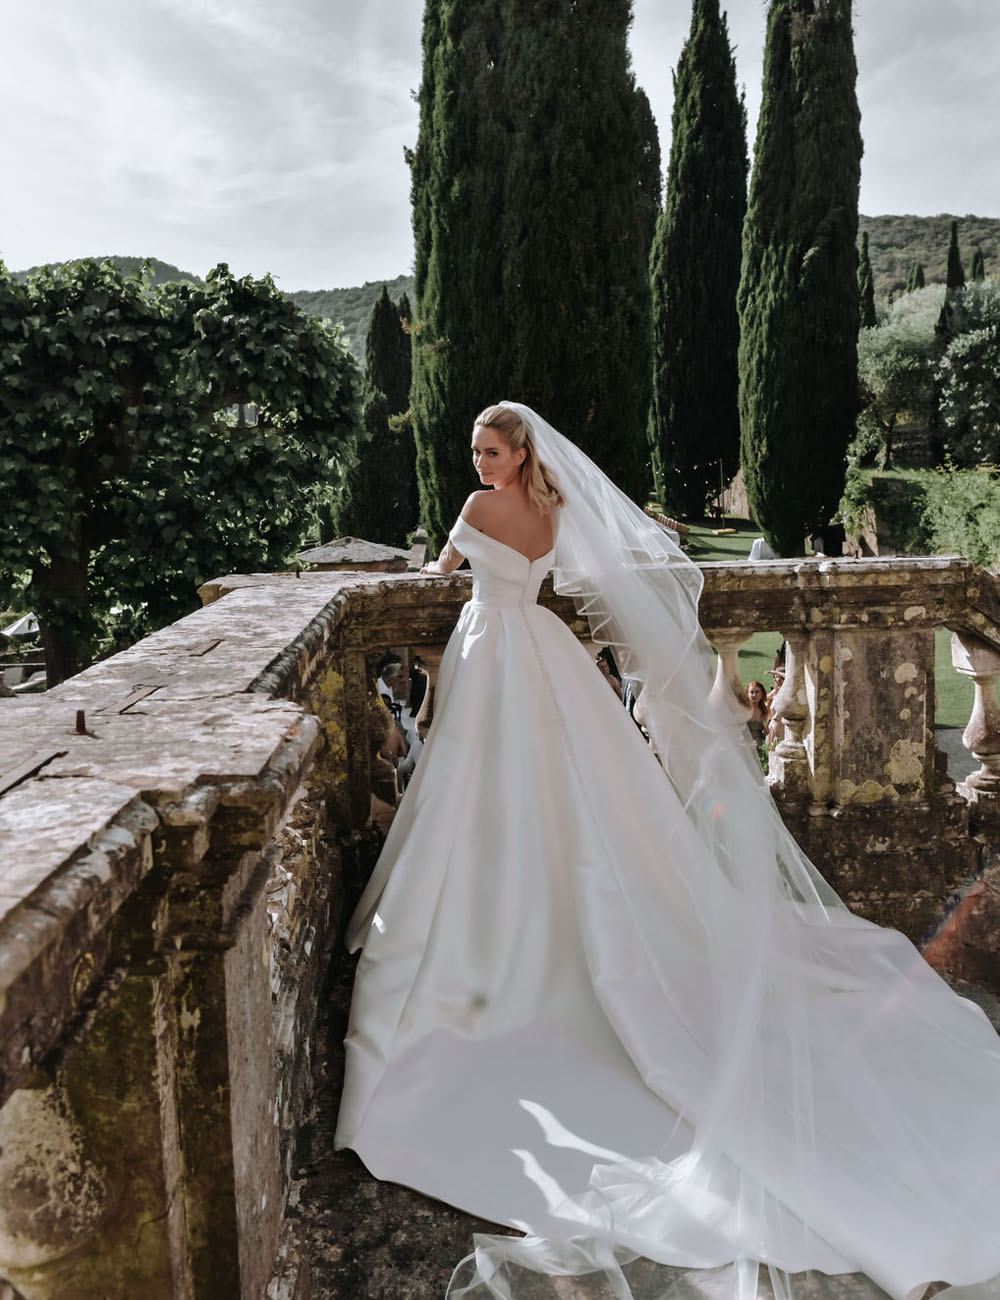 Rianne Meijer & Roy Atiya trouwen in Toscane